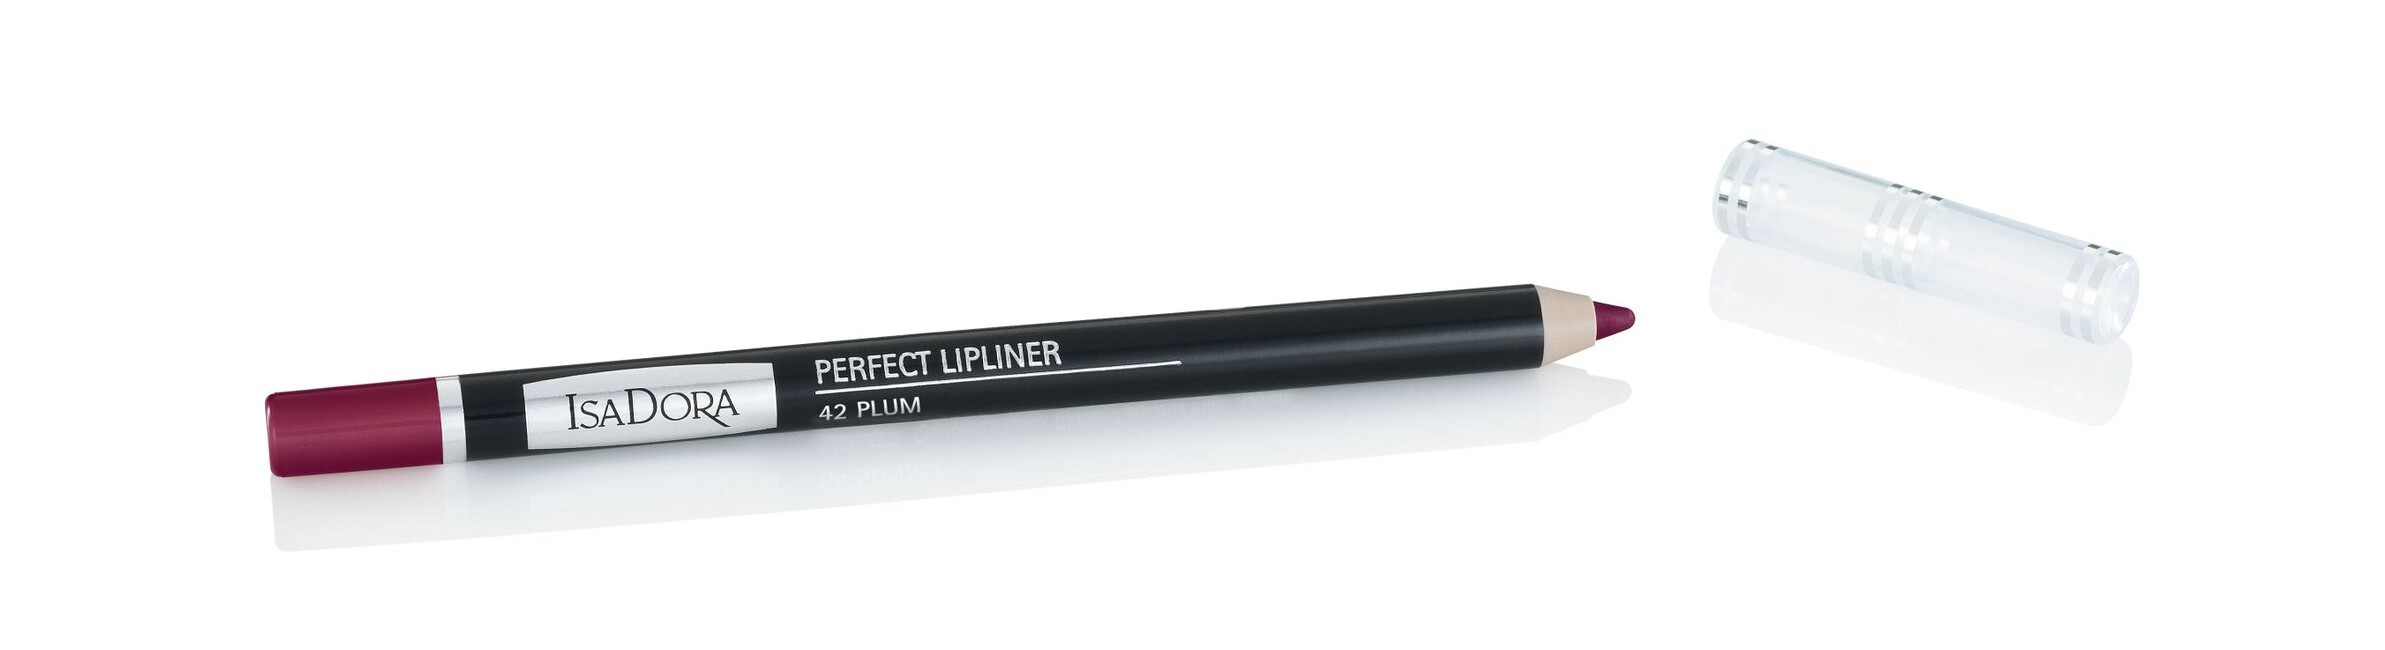 #2 - IsaDora Perfect Lipliner - 42 Plum